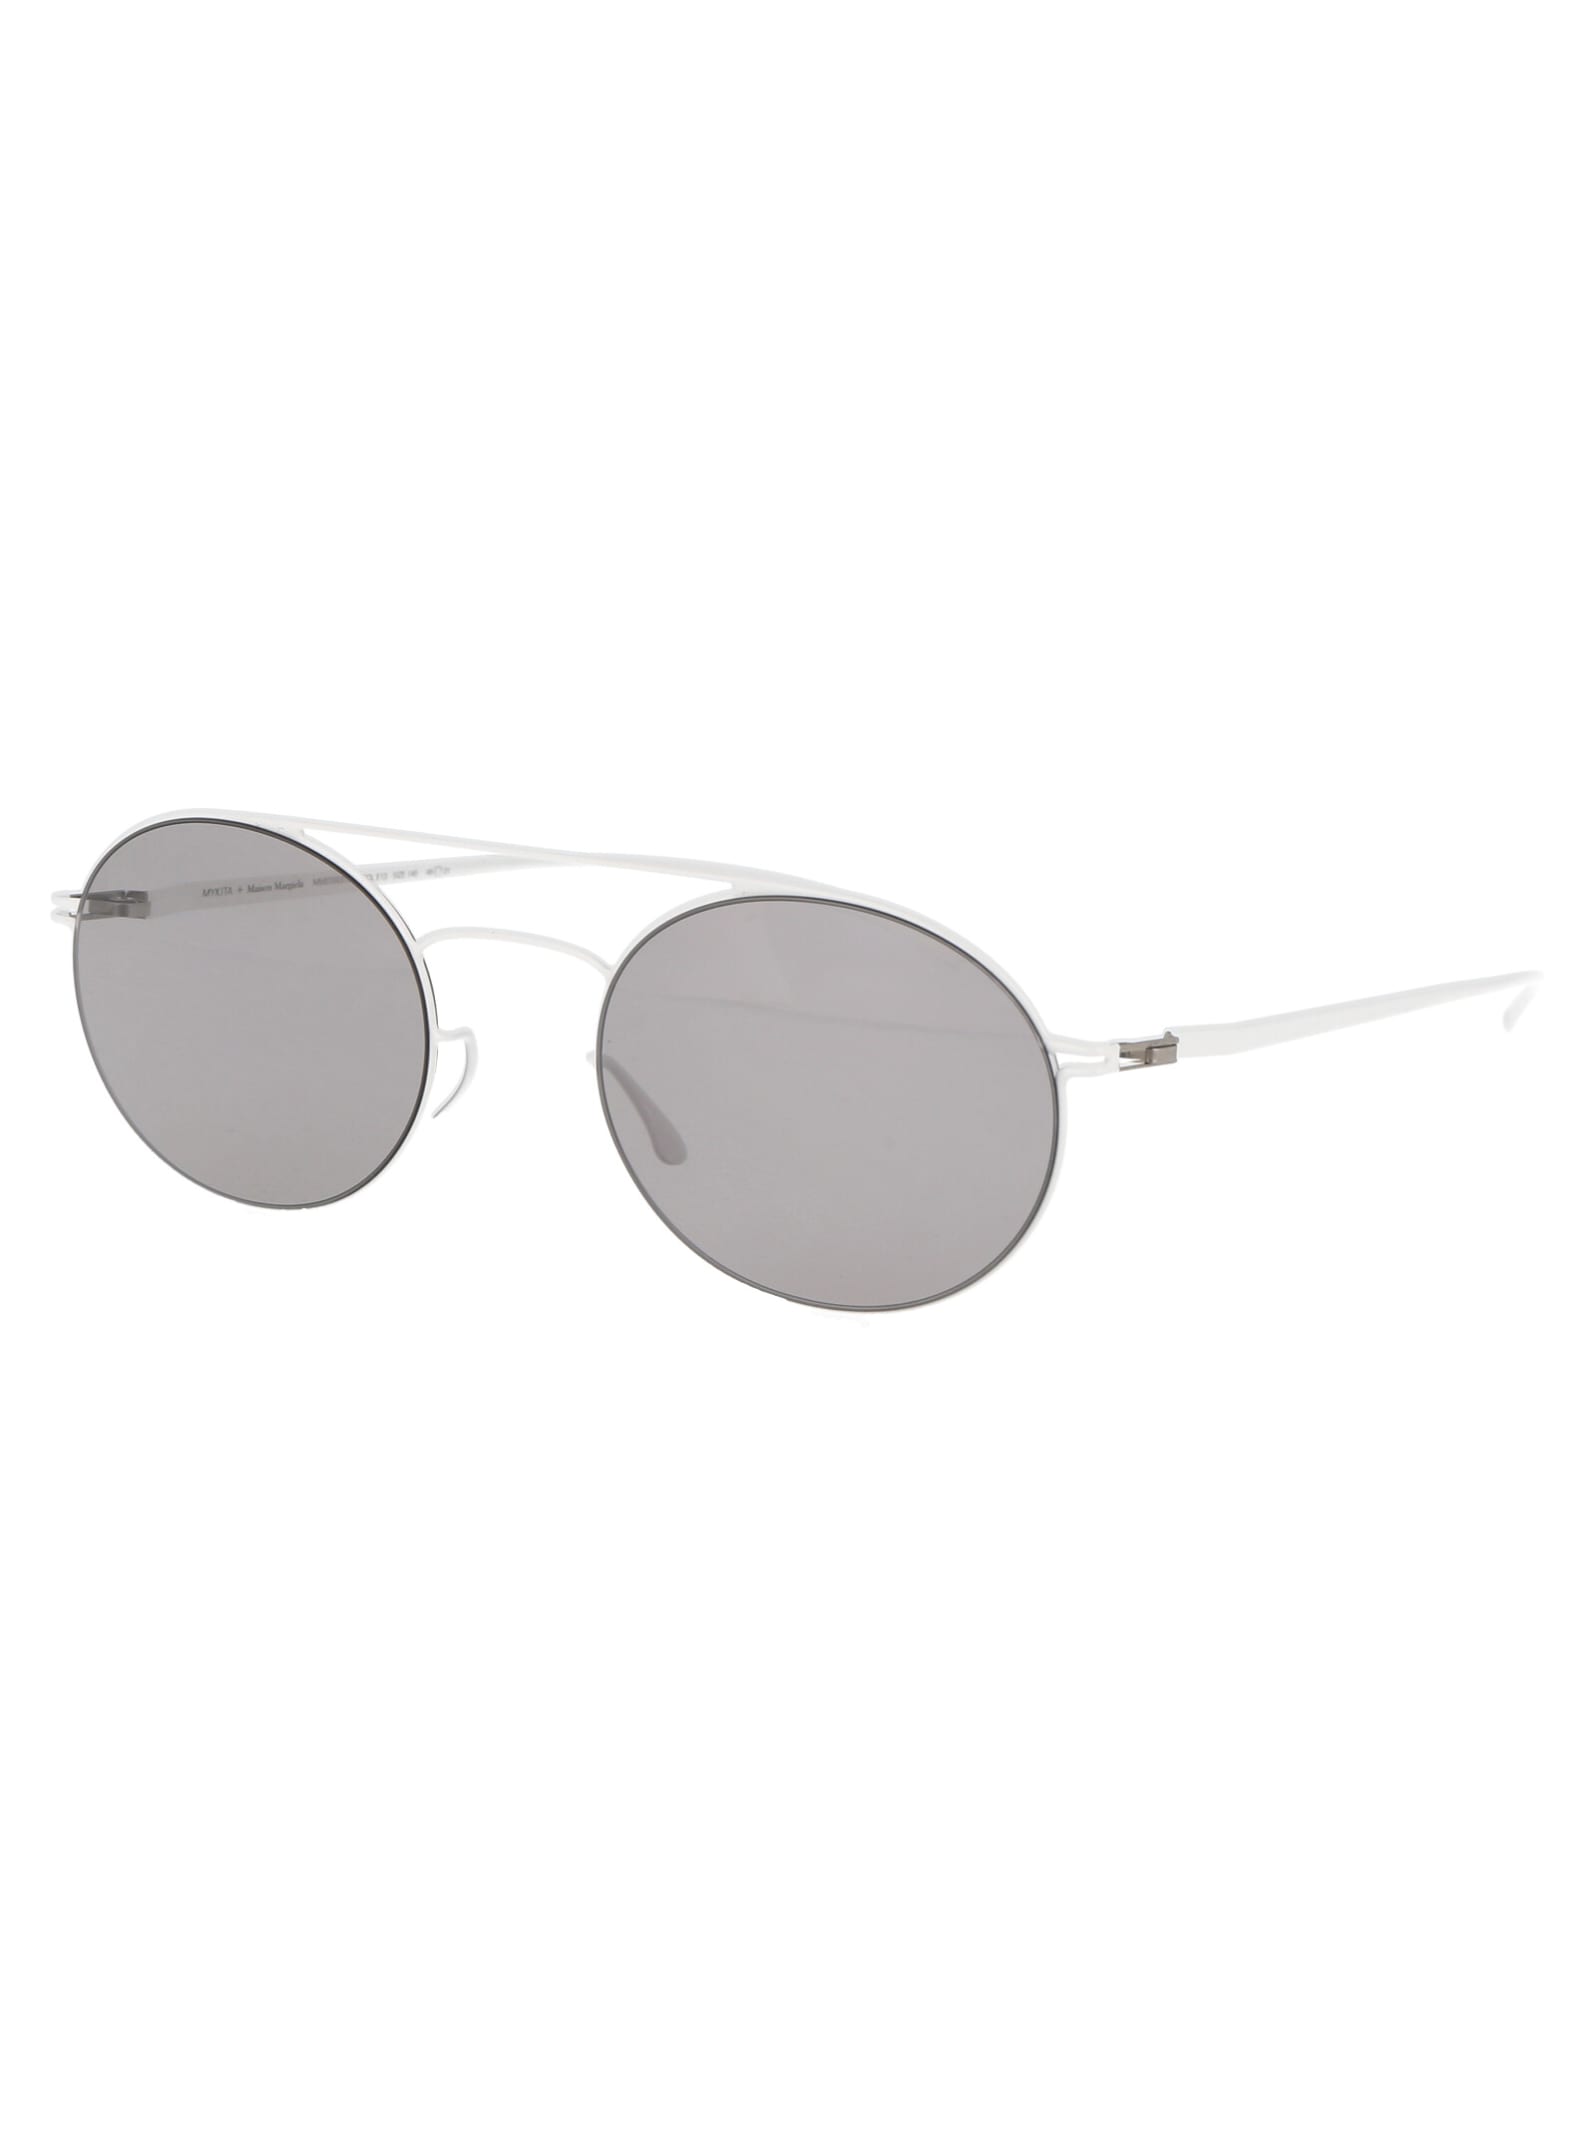 Shop Mykita Mmesse019 Sunglasses In 333 E13 White Warm Grey Flash